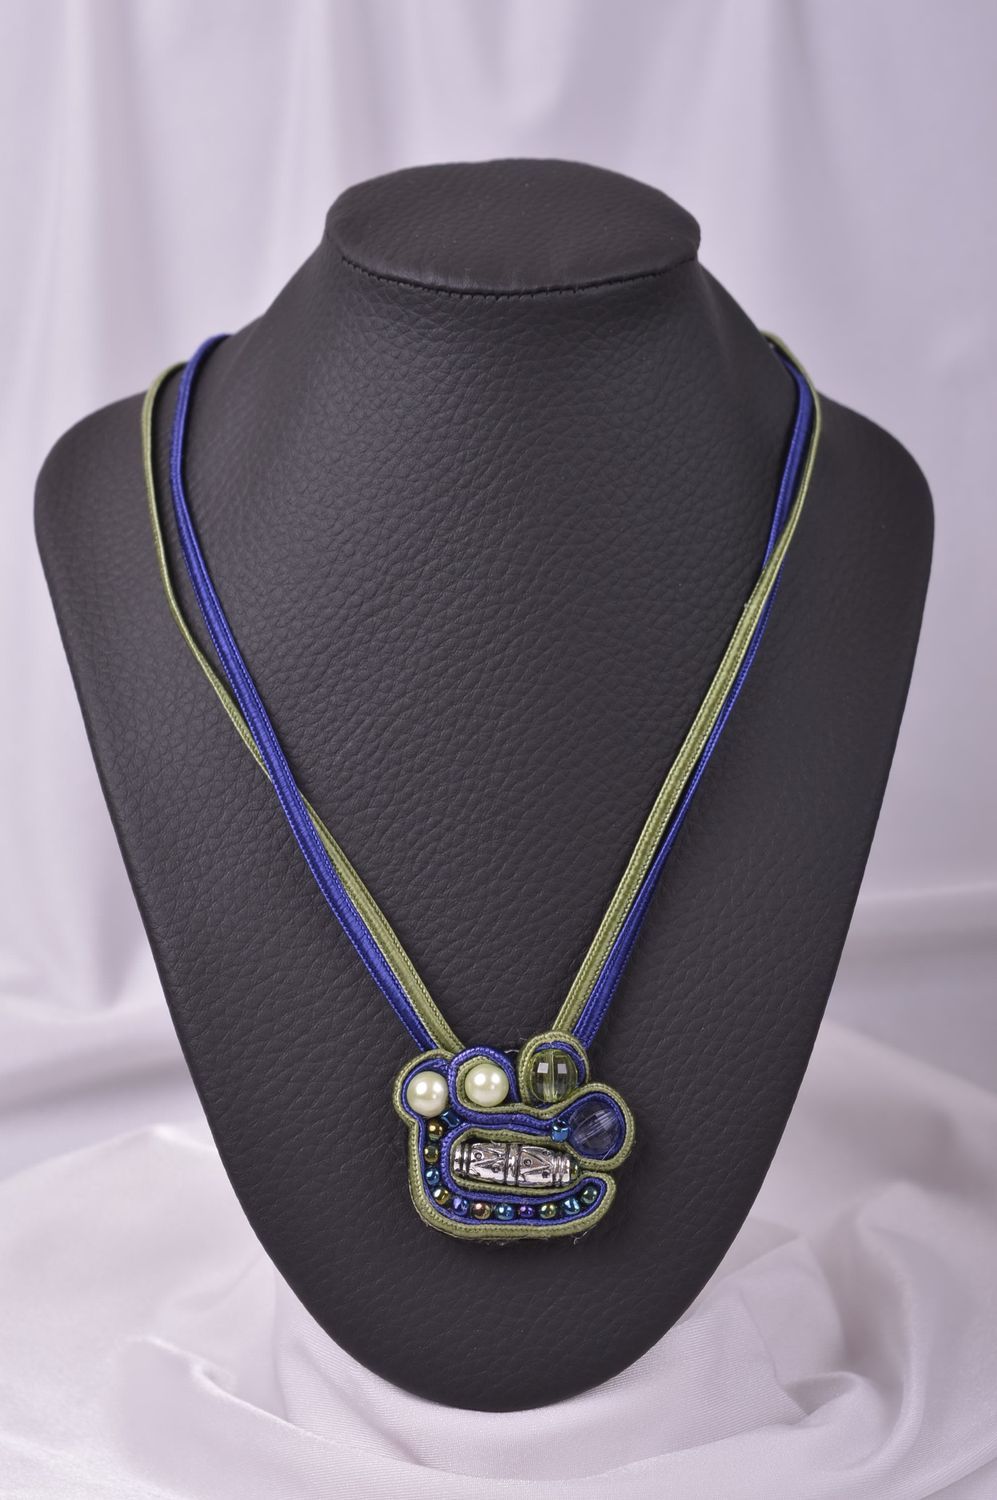 Soutache pendant handmade soutache pendant embroidered pendant with beads photo 1